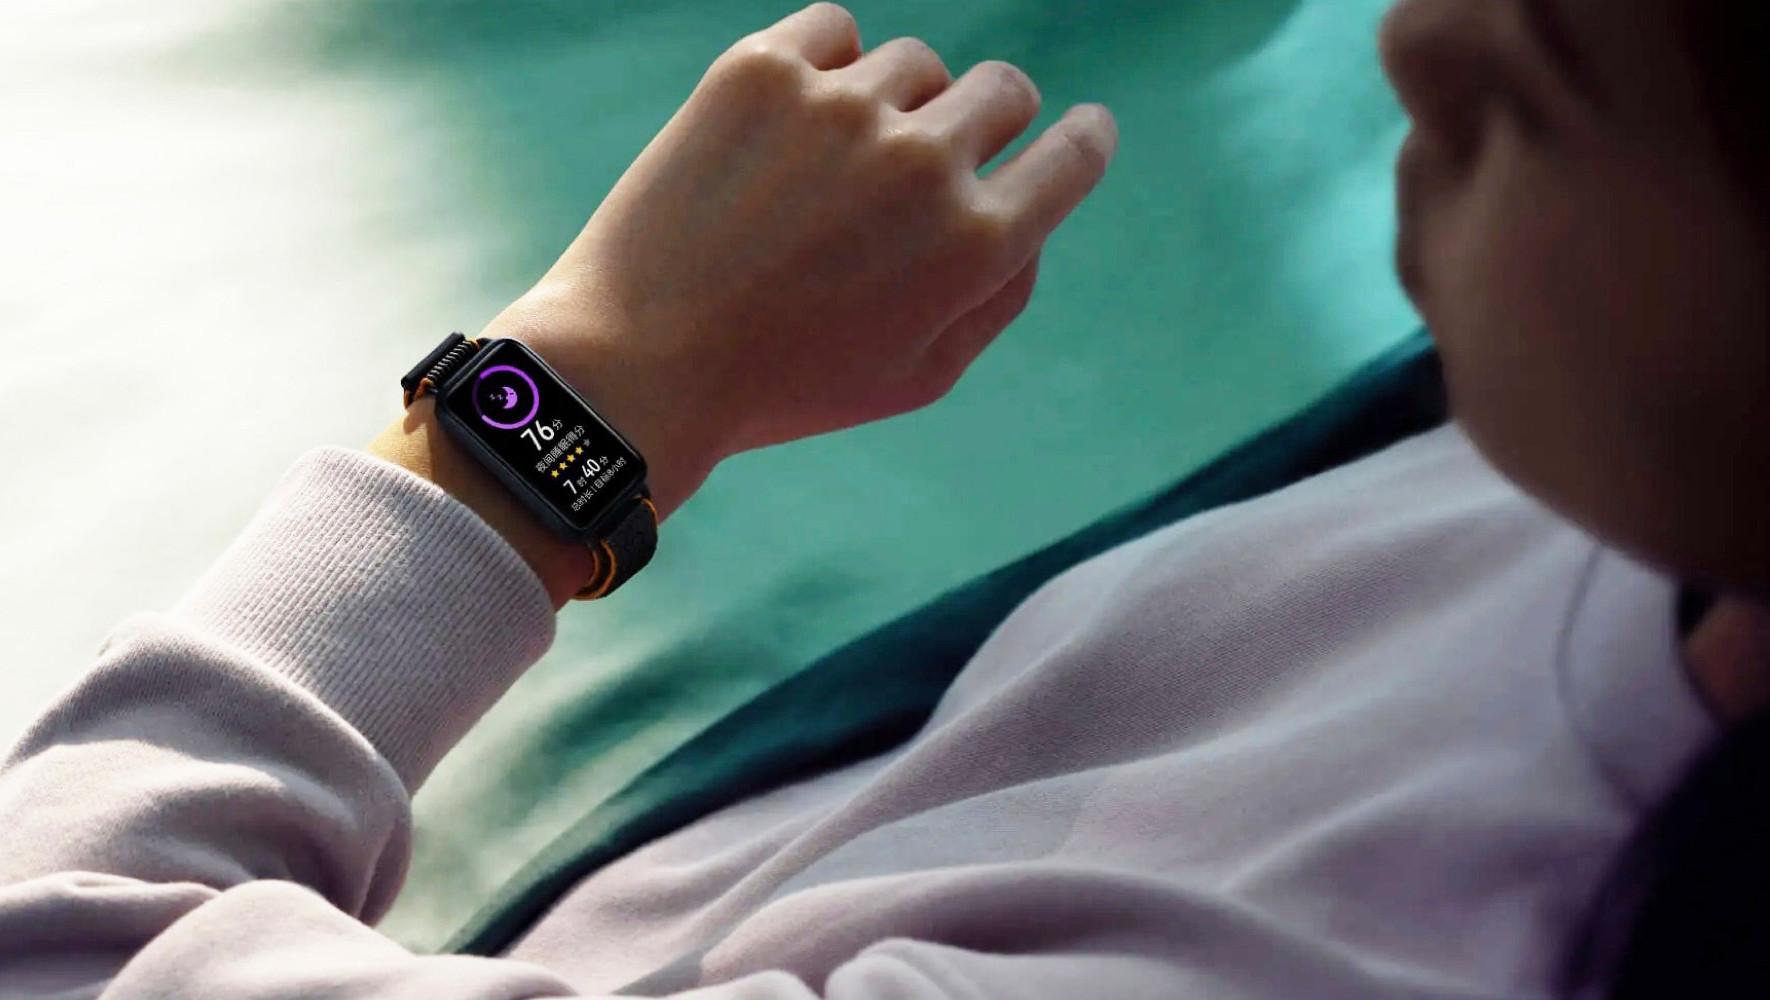 Huawei Band 8 NFC / 8 Smartband Bracelet 1.47 AMOLED Heart Rate Blood  Oxygen